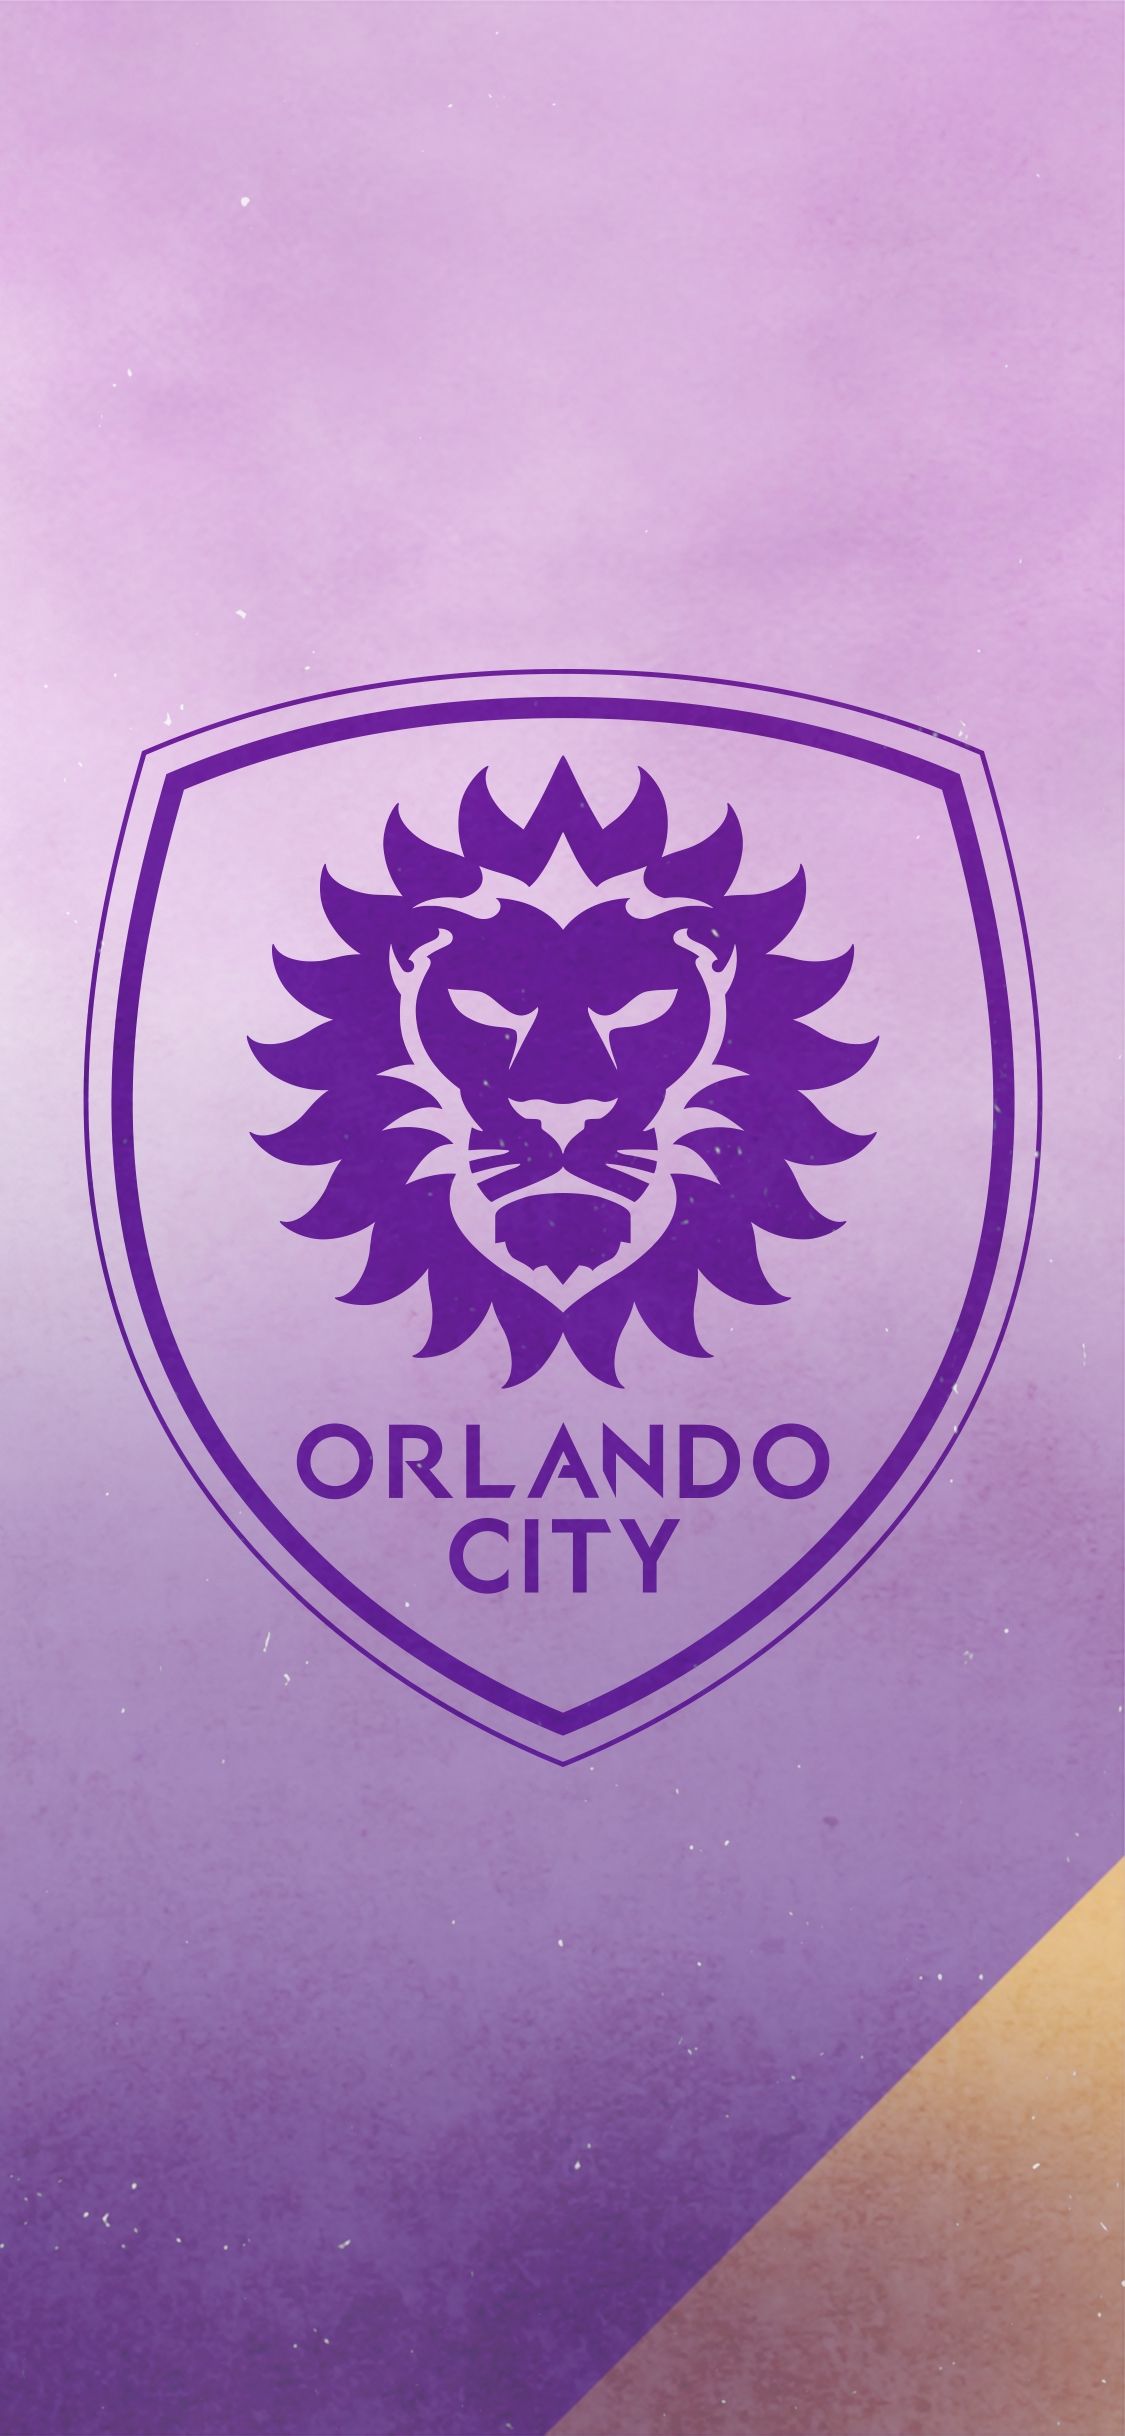 S Orlando City Soccer Club